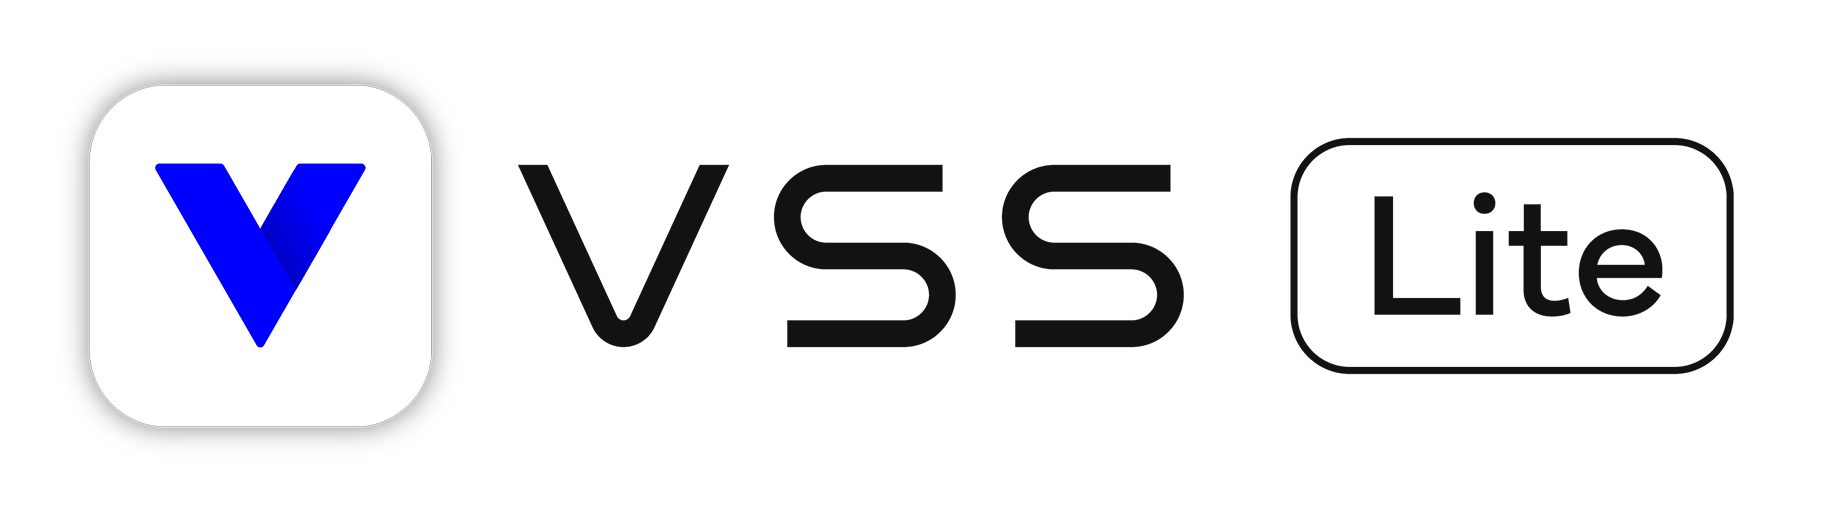 VSS lite logo